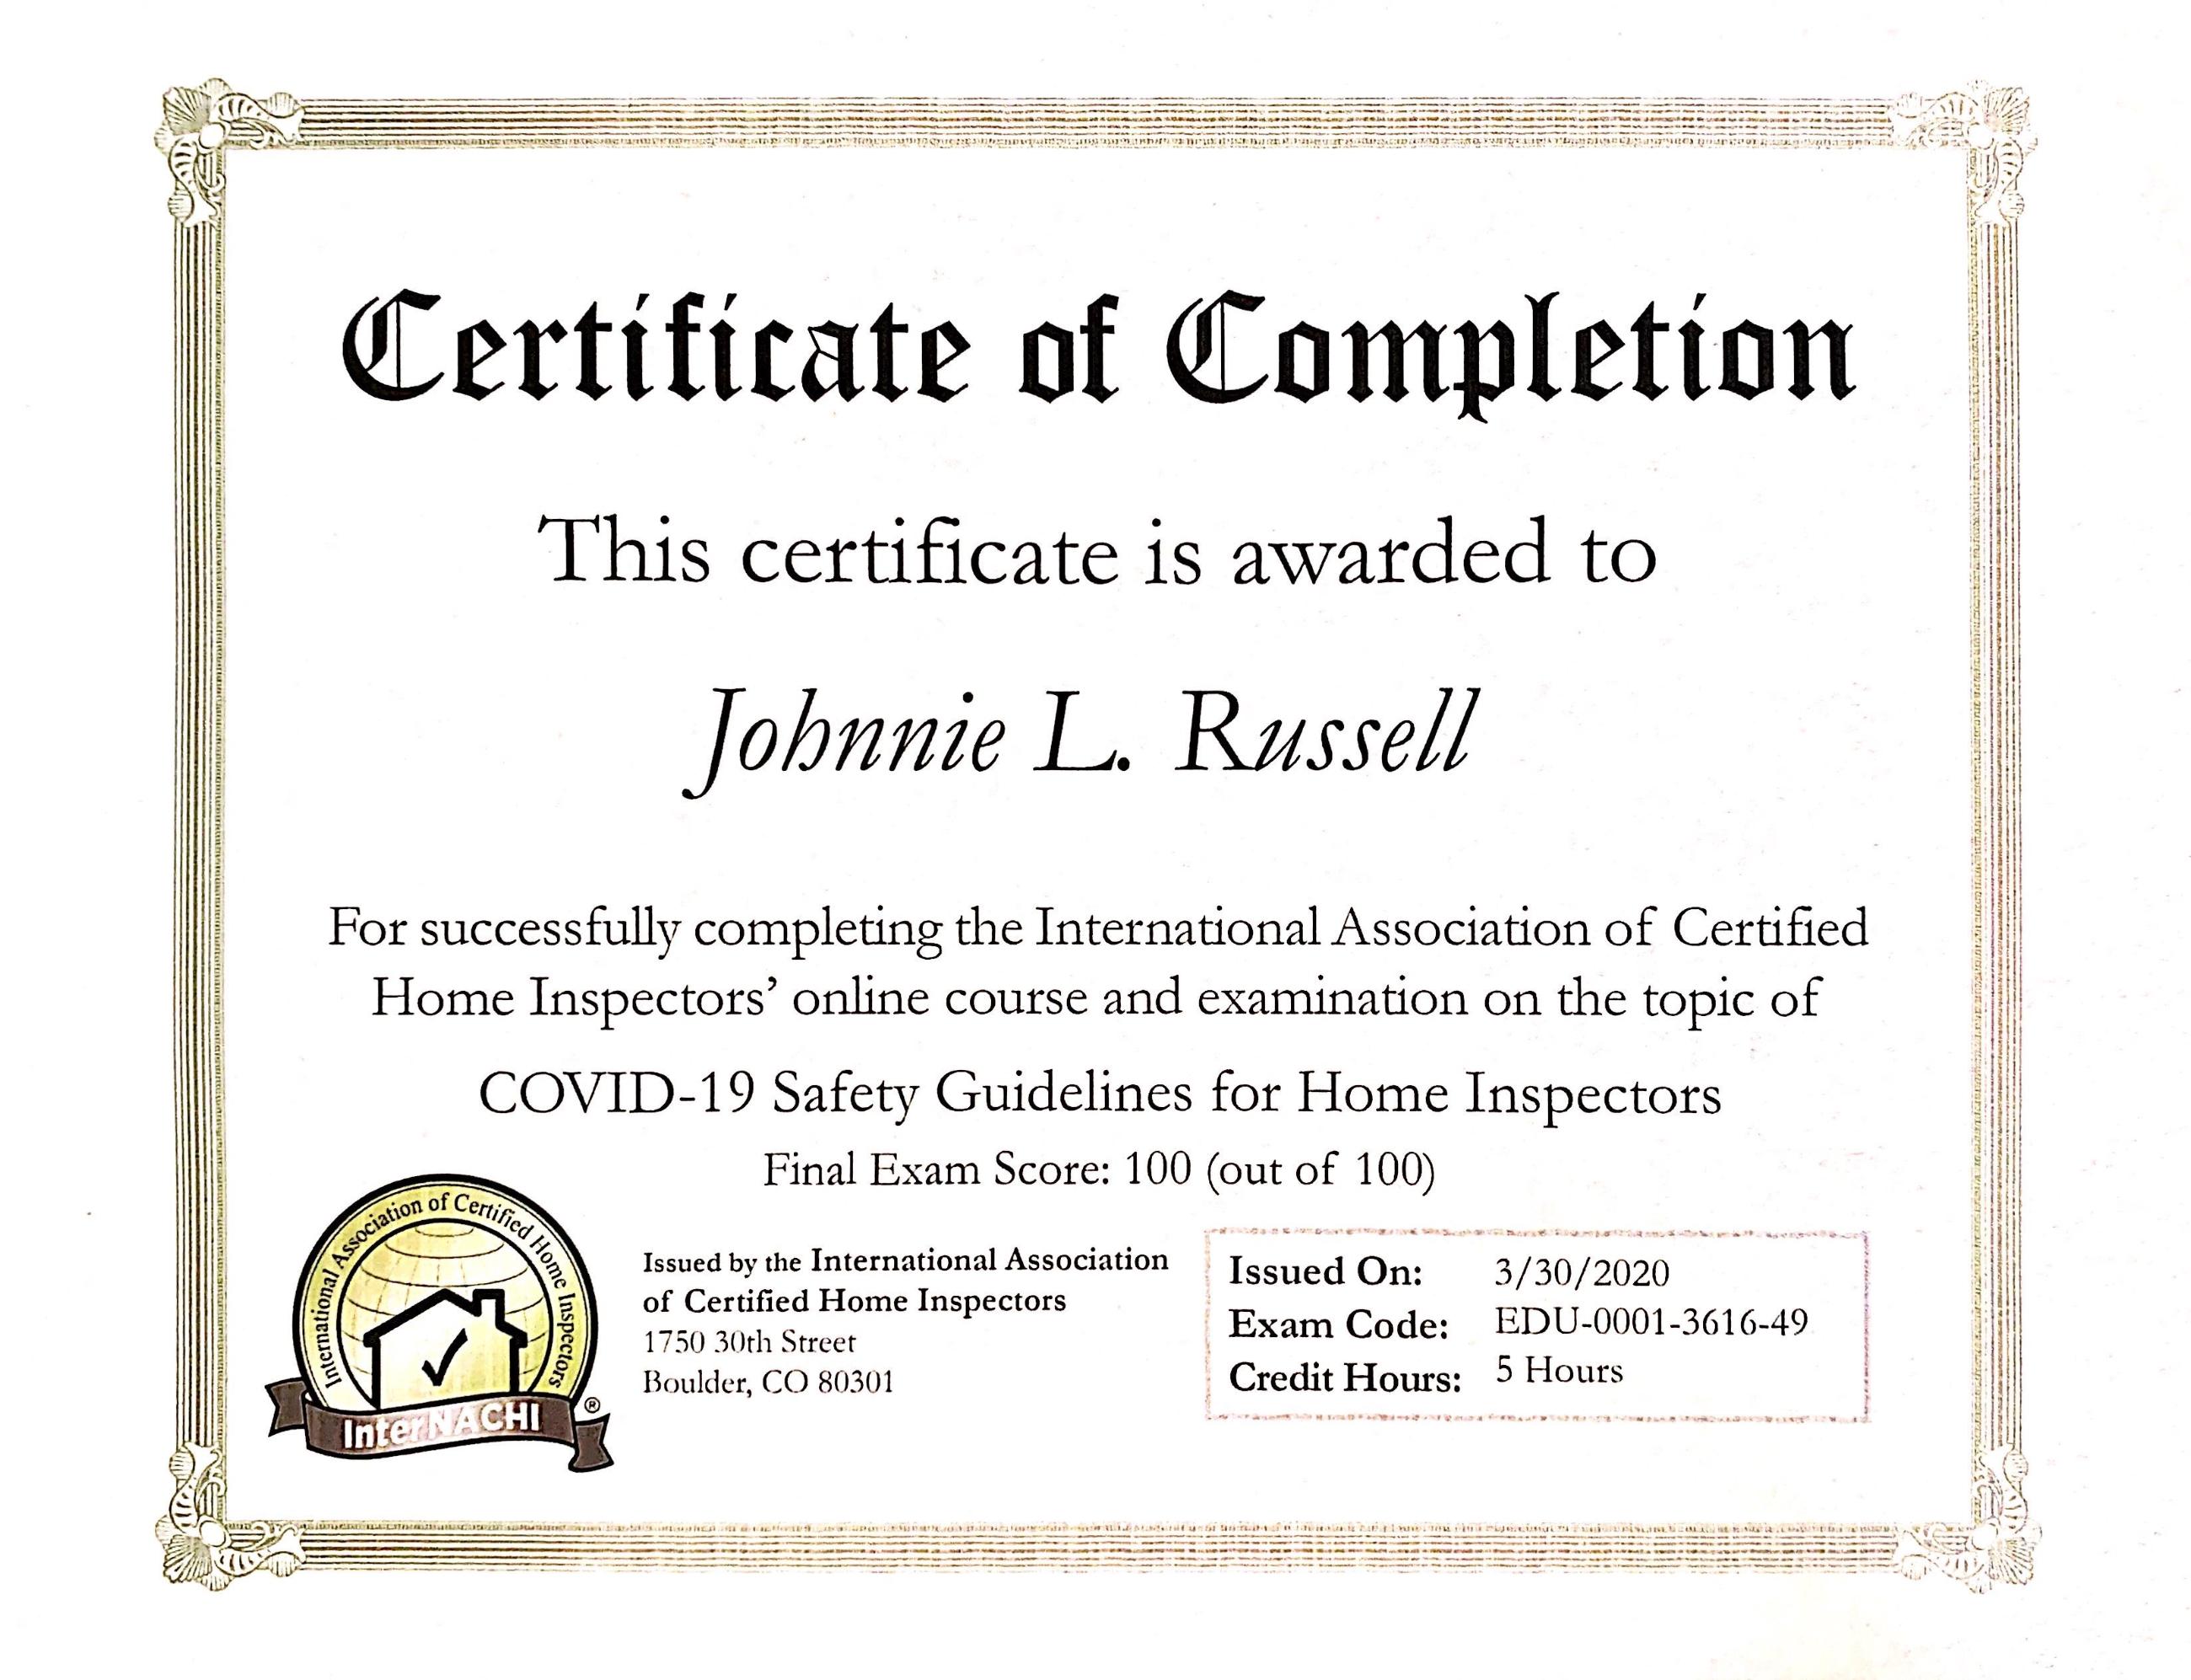 Covid Certification